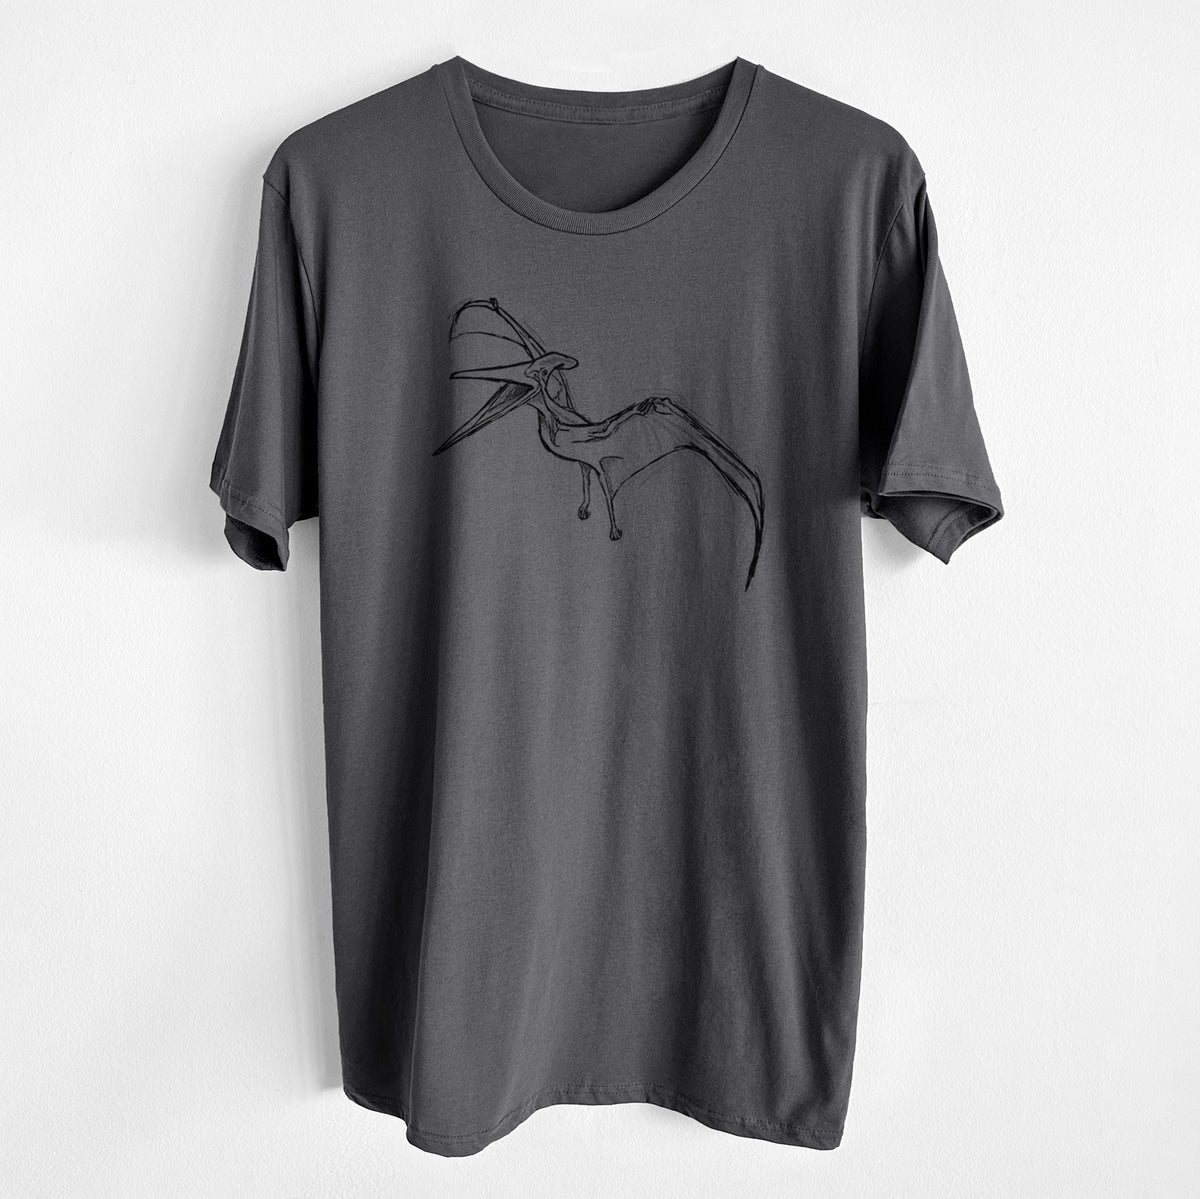 Pteranodon Longiceps - Unisex Crewneck - Made in USA - 100% Organic Cotton